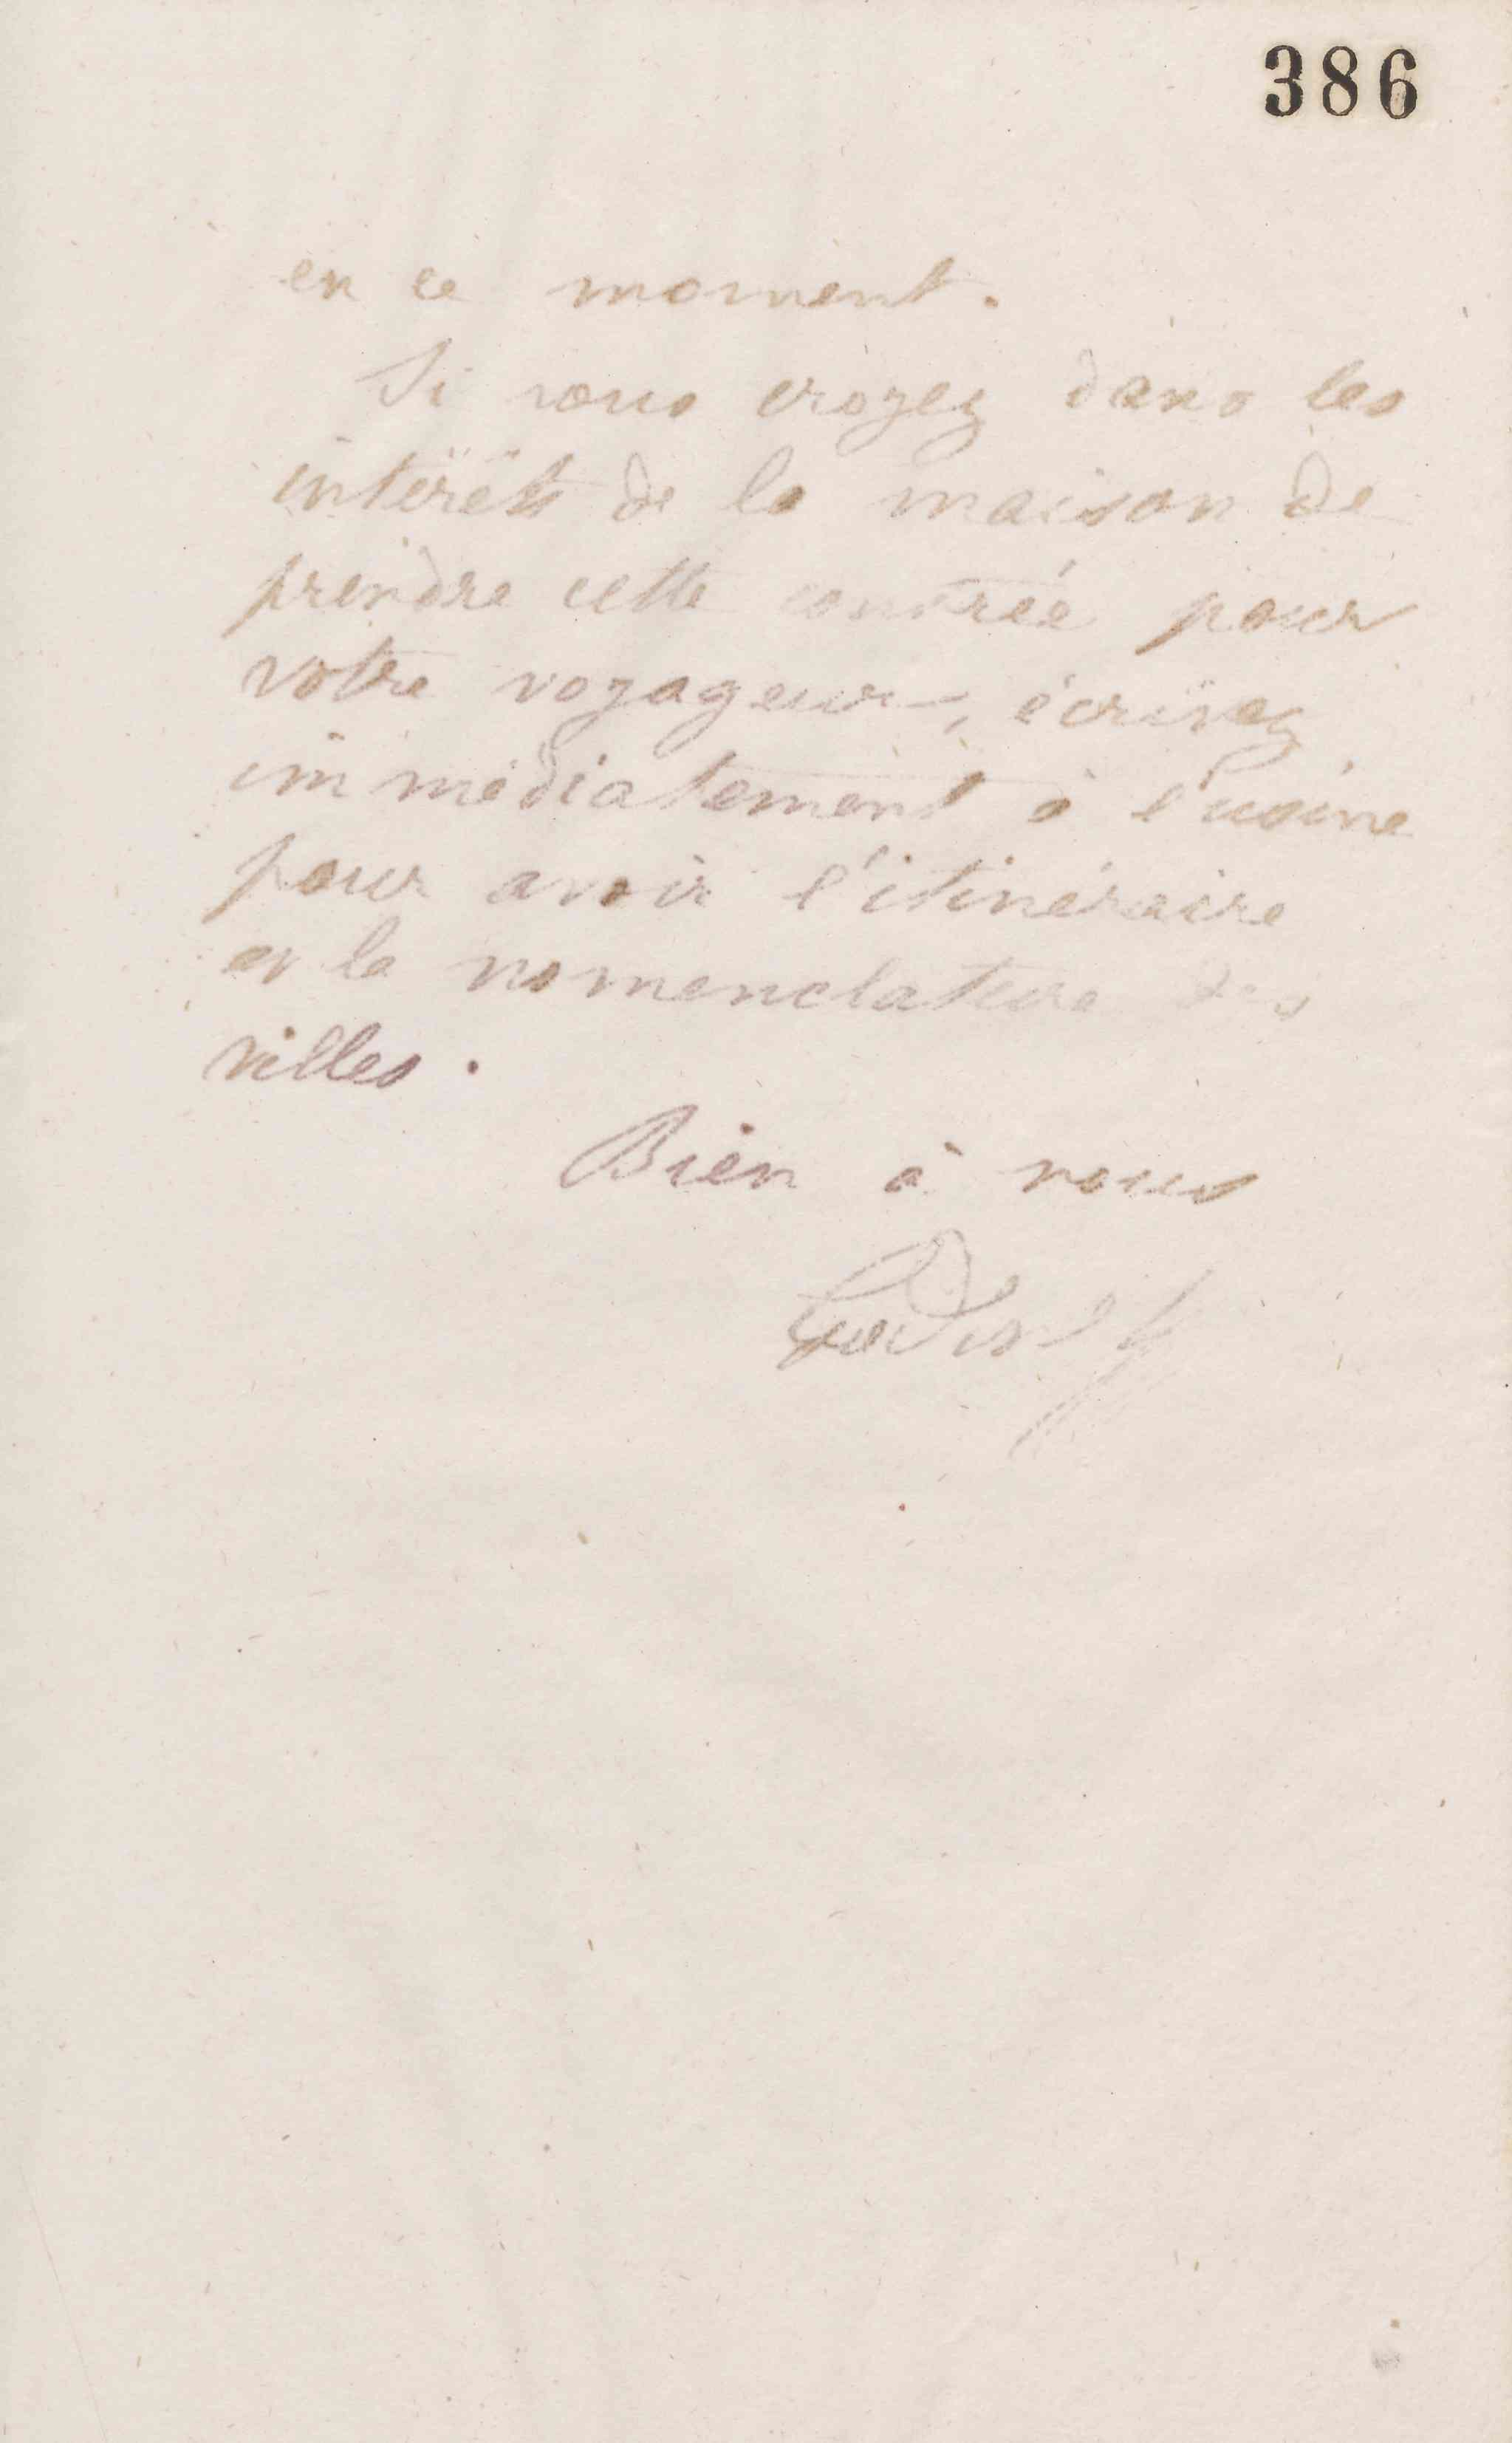 Jean-Baptiste André Godin à Eugène André, 4 juillet 1873